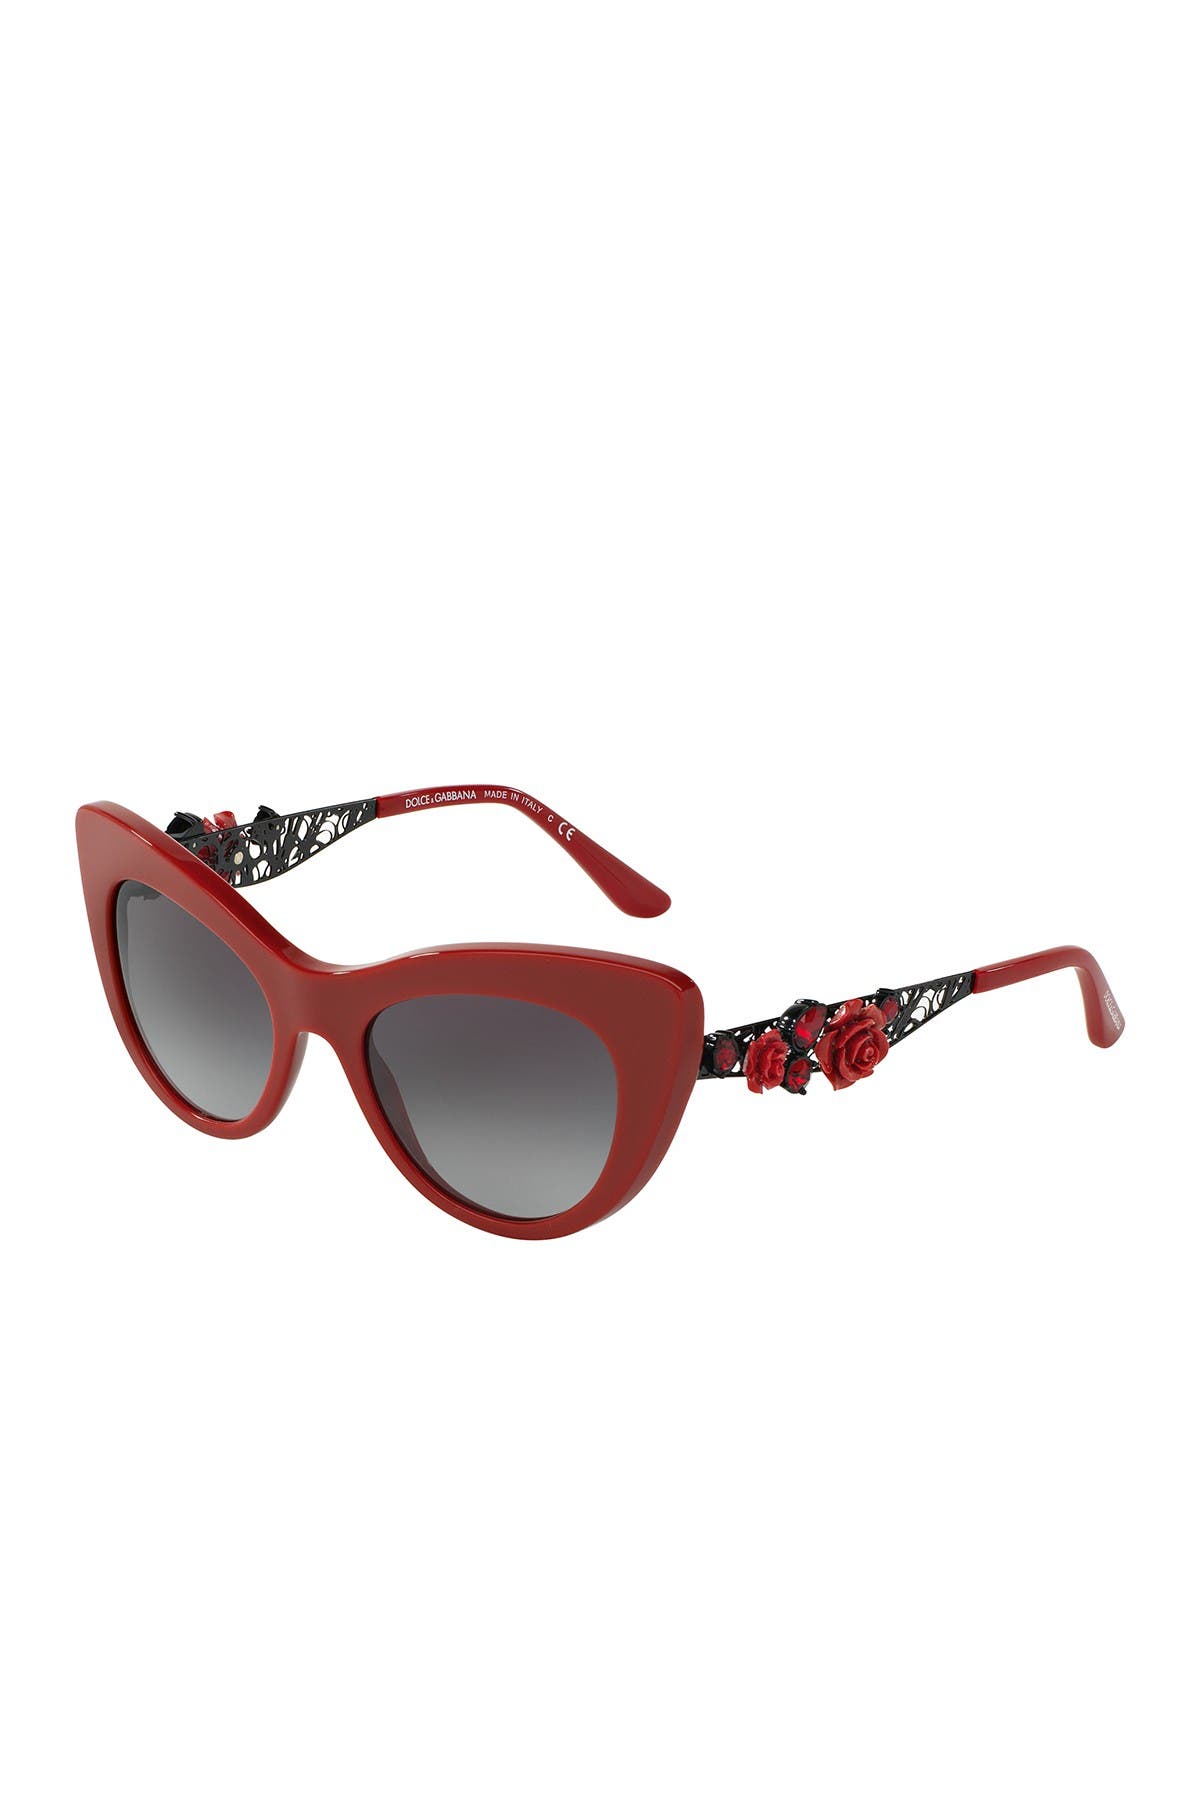 dolce & gabbana 50mm rose cat eye sunglasses